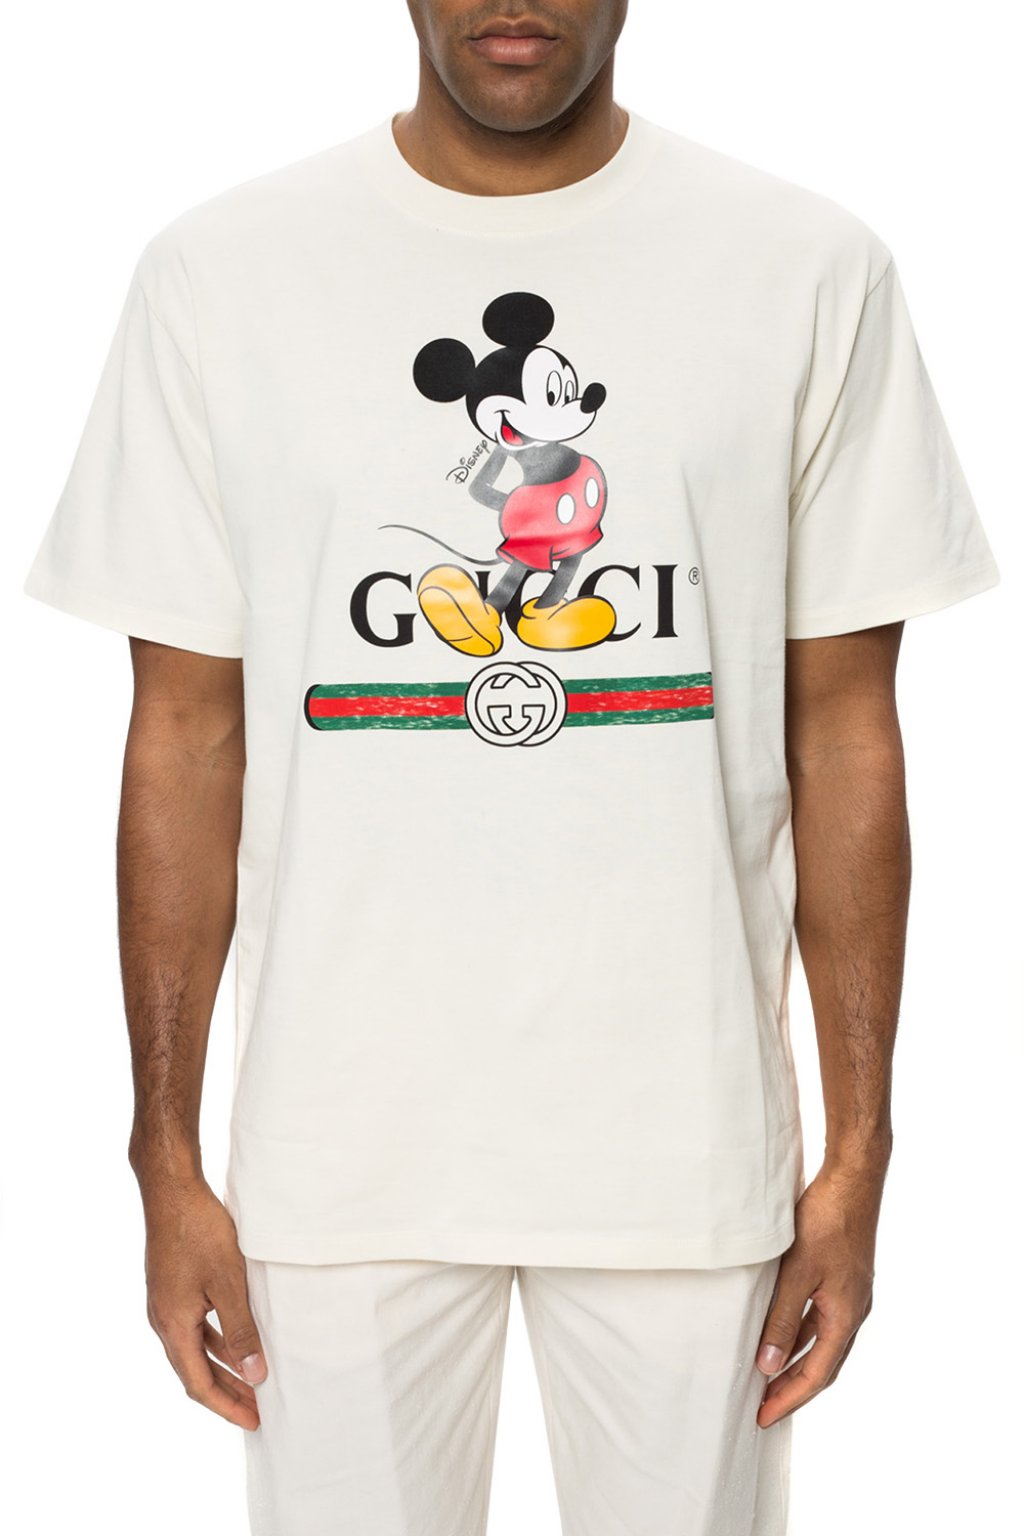 Gucci x Disney Mickey White T-Shirt